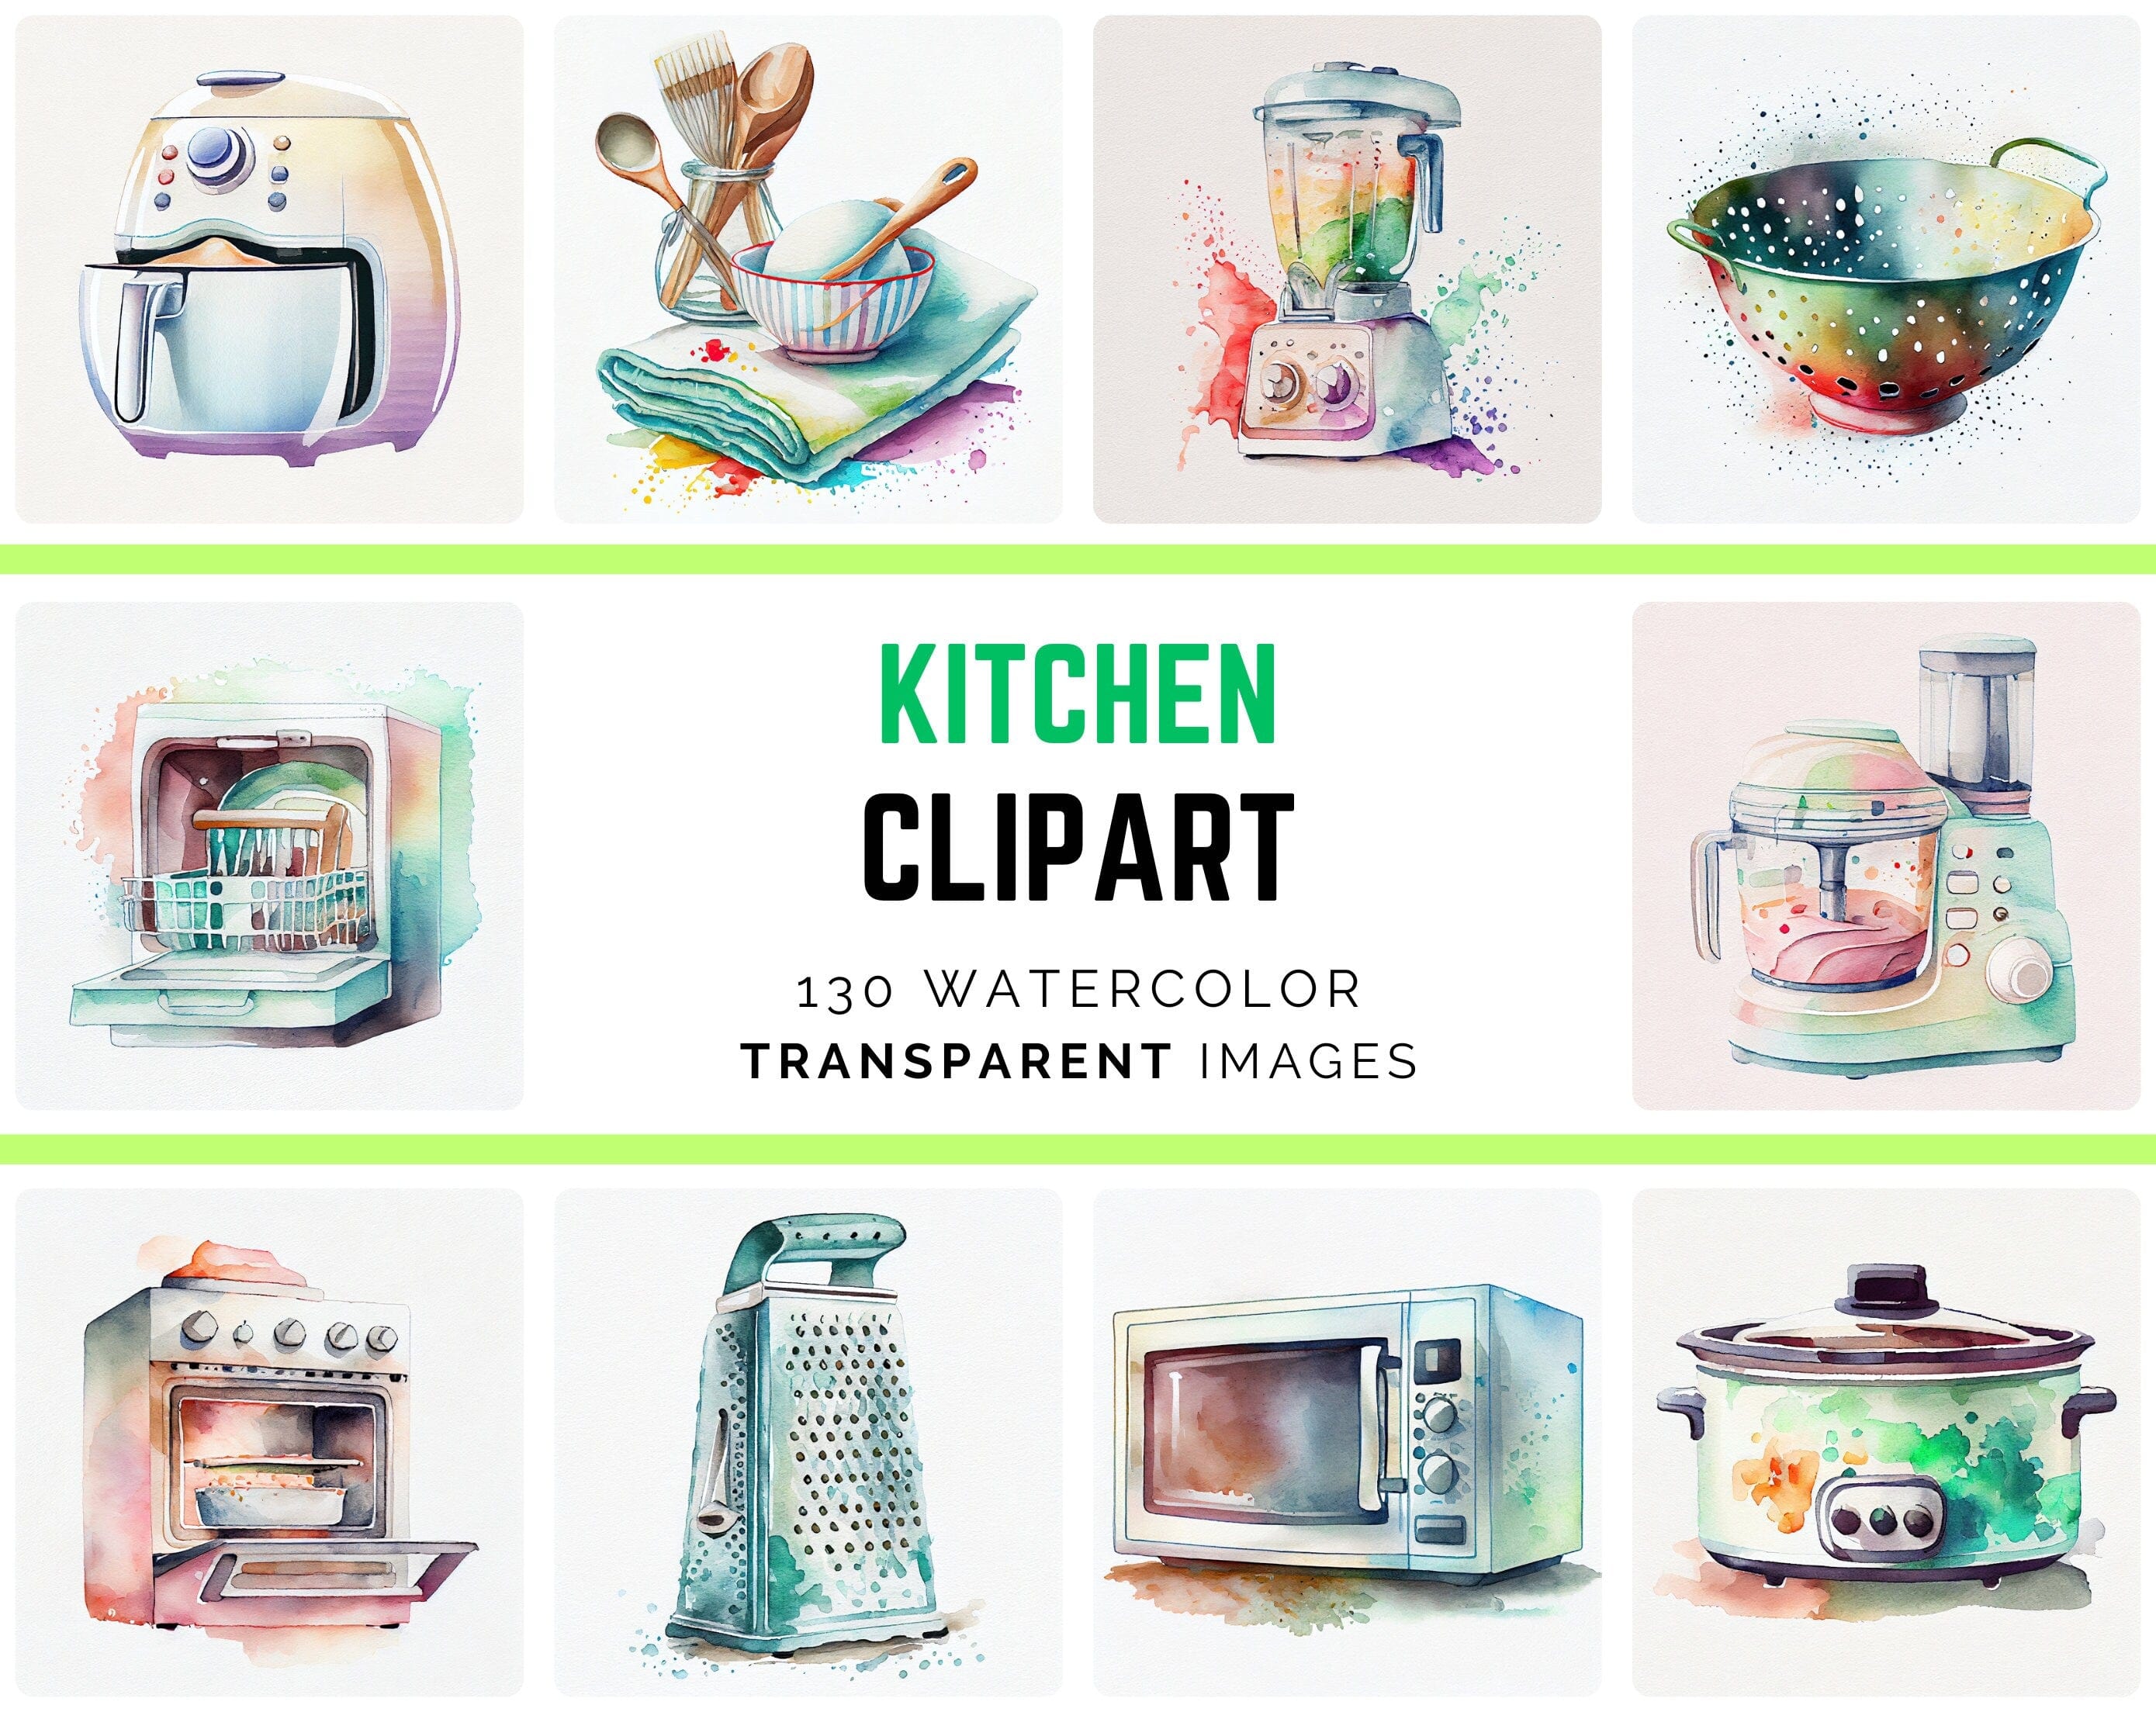 Kitchen Watercolor Appliance Bundle Clipart: 130 High-Quality Images for Your Home Decor Projects, Kitchen sublimation clipart Digital Download Sumobundle